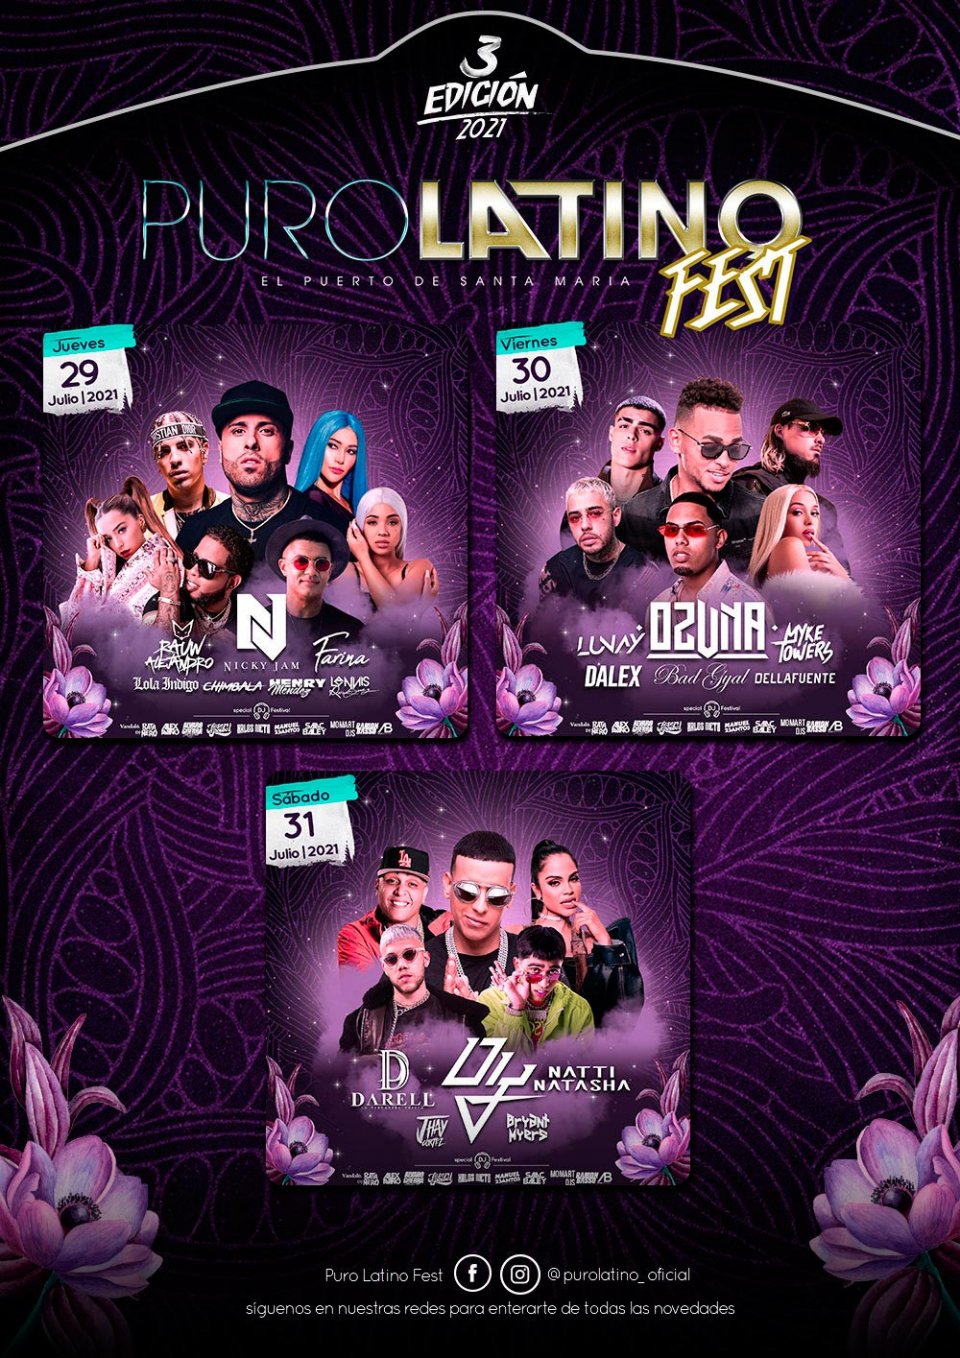 Puro Latino Fest